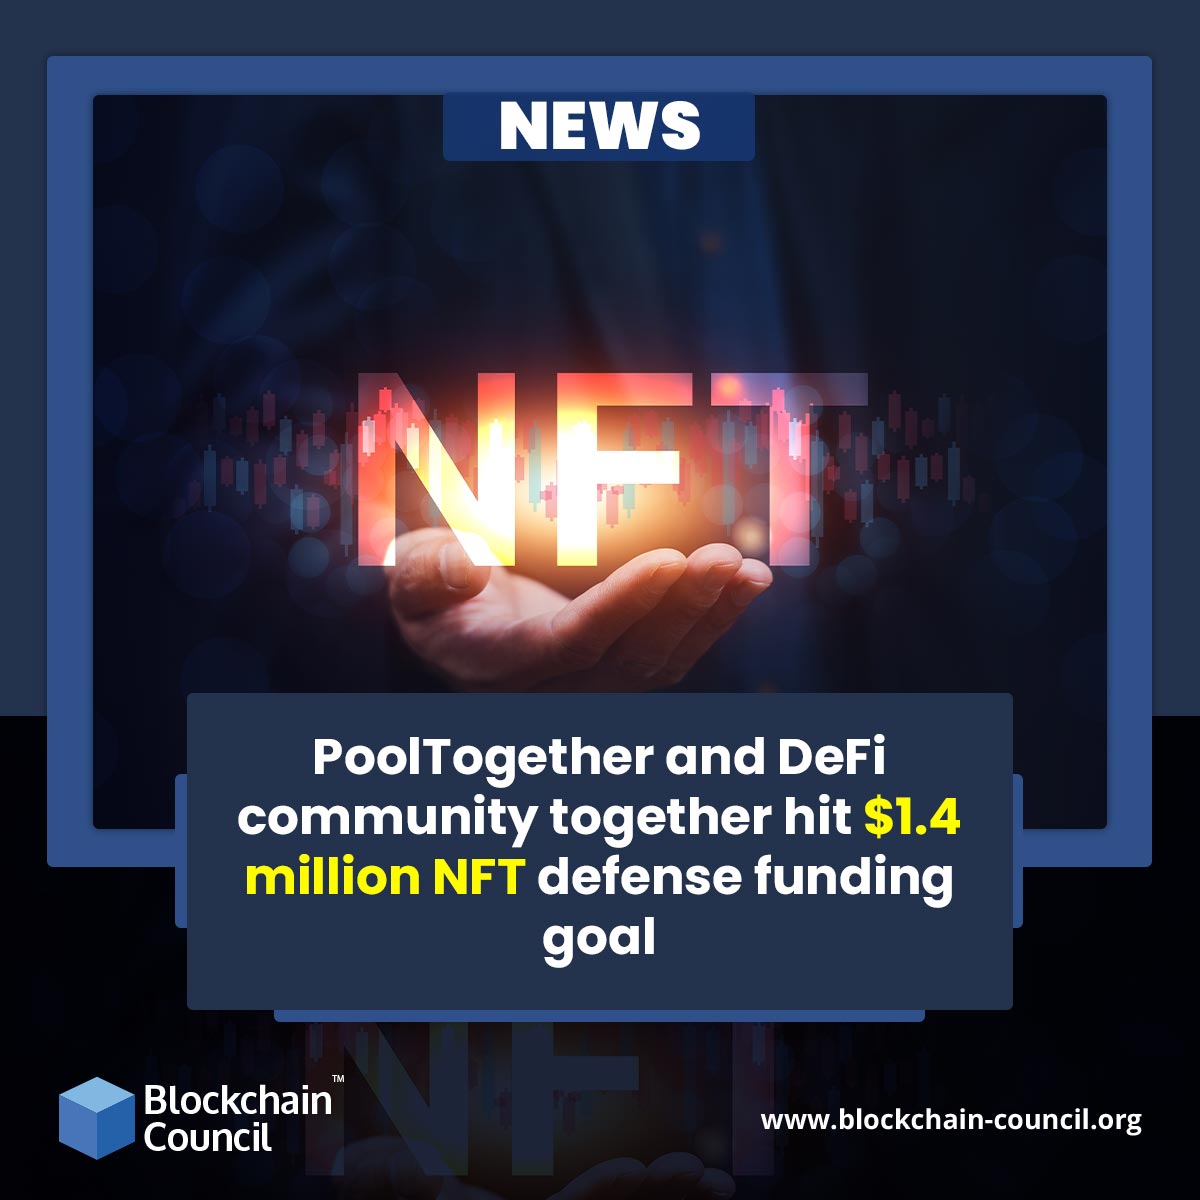 PoolTogether and DeFi community together hit $1.4 million NFT defense funding goal